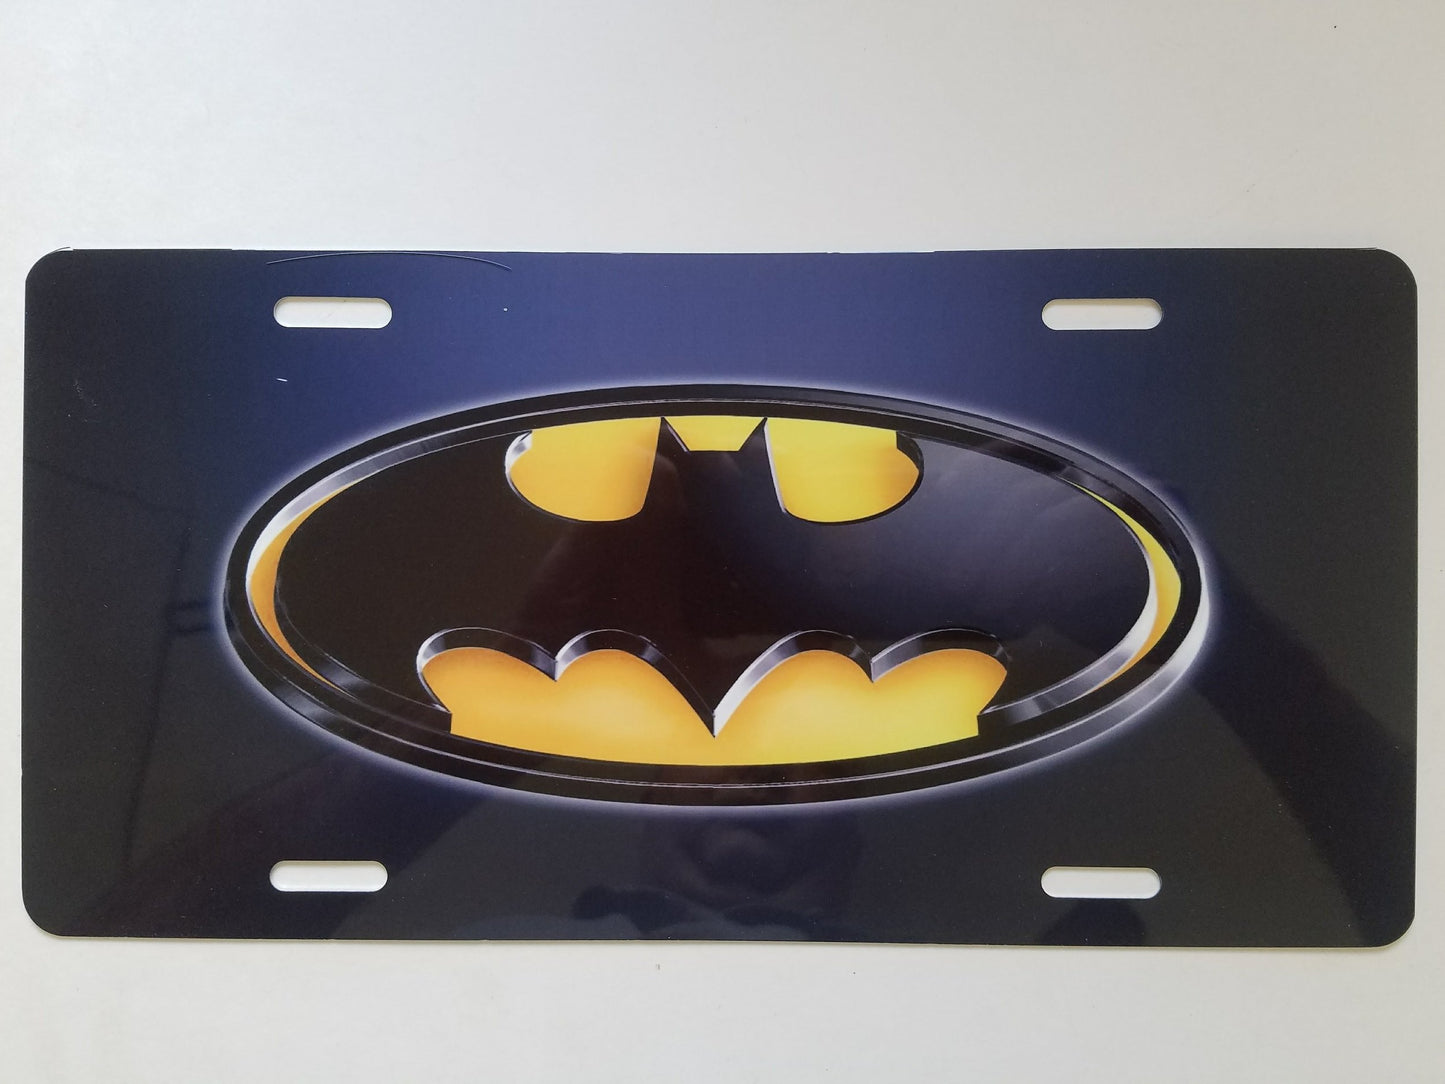 Batman License plate